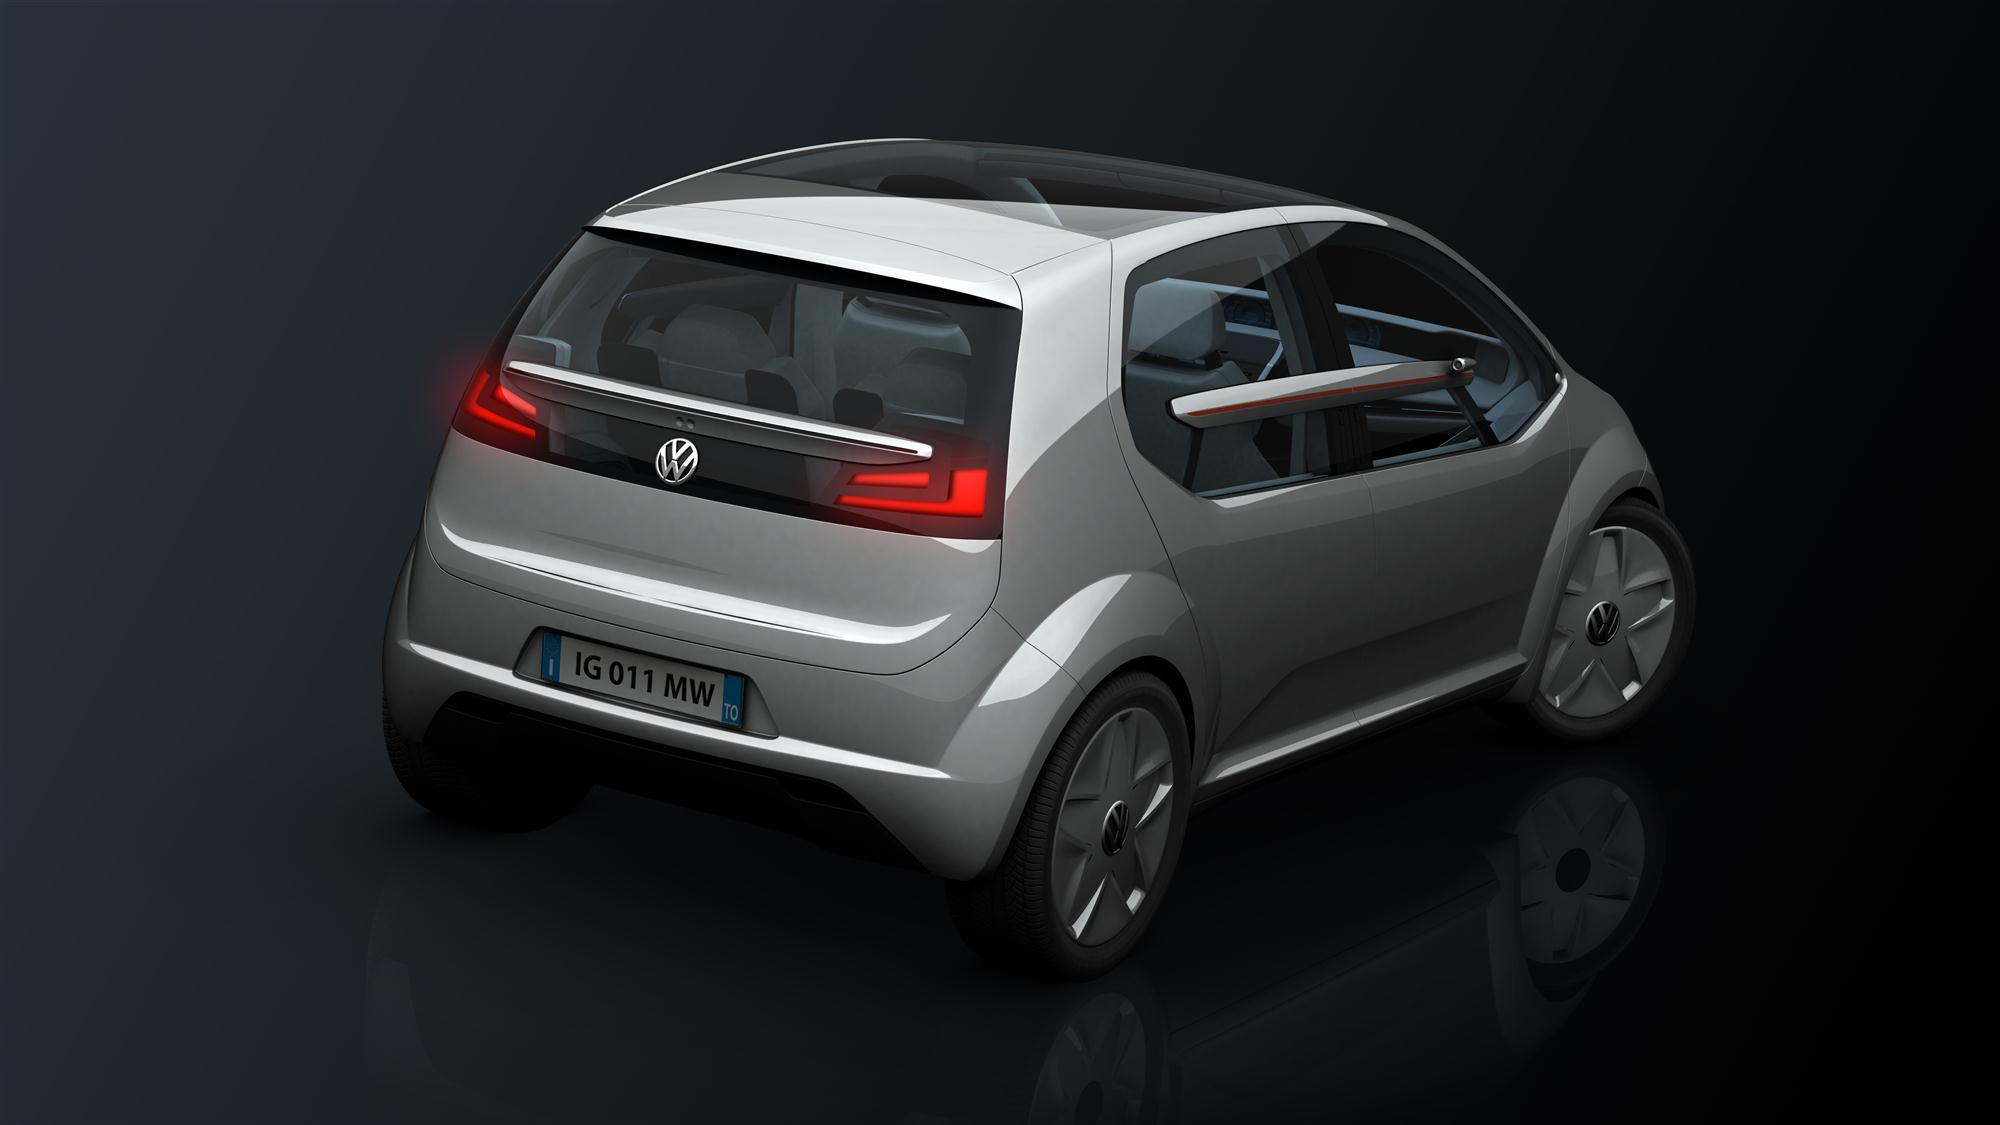 Volkswagen Italdesign Giugiaro GO! Concept